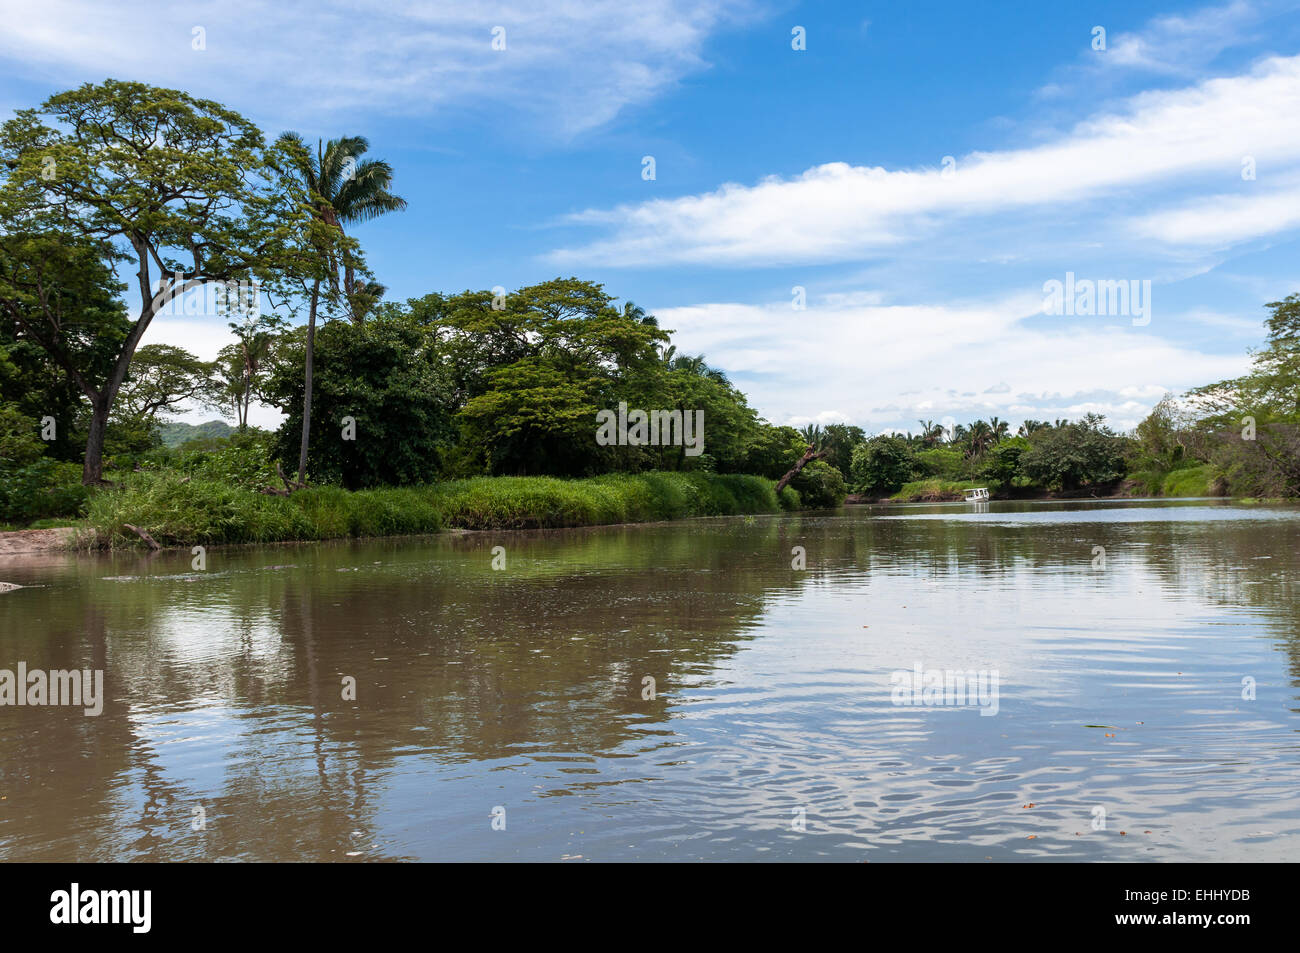 Puerto Viejo de Sarapiqui river in Costa Rica Stock Photo